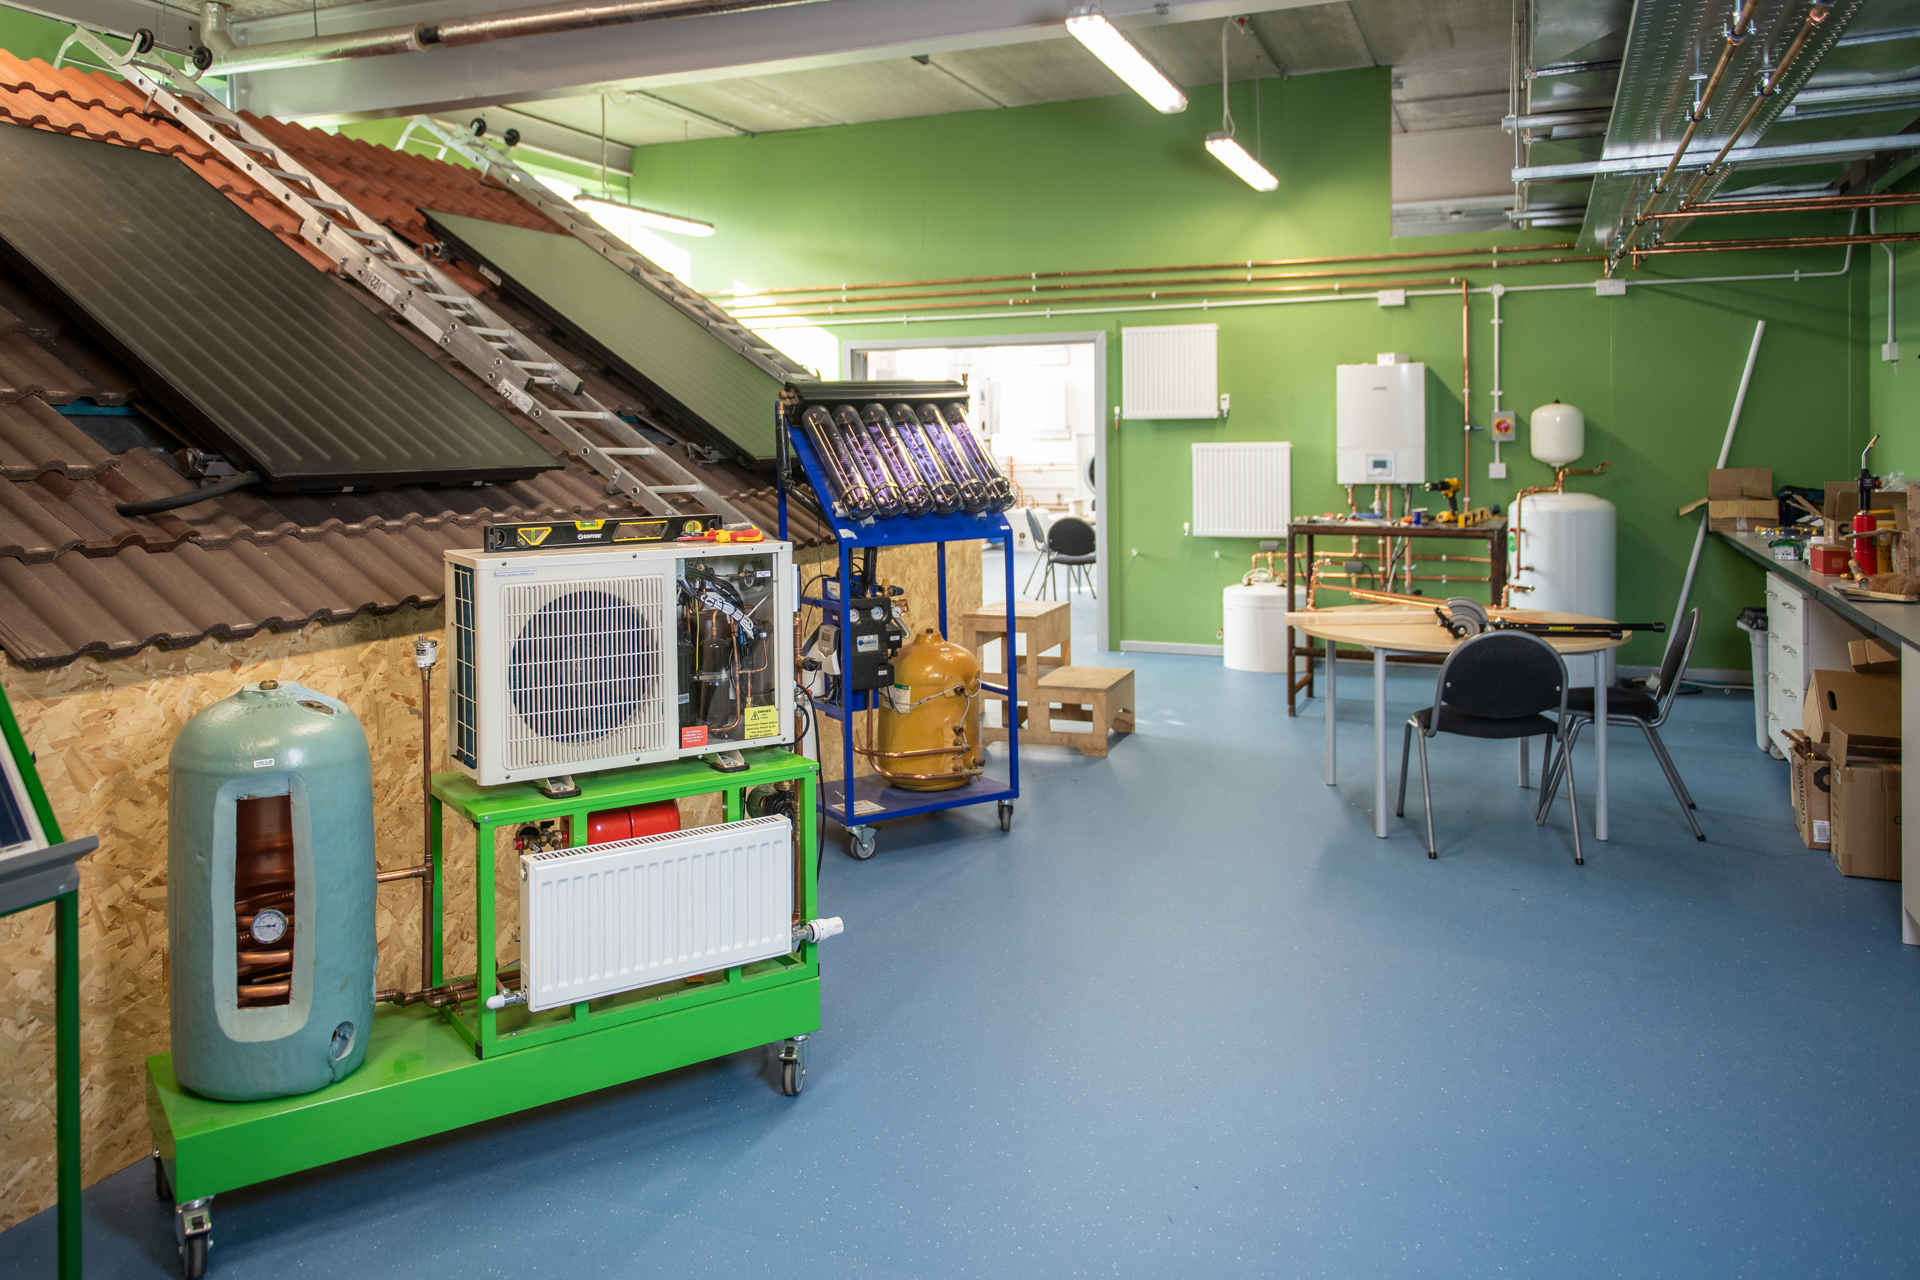 Edinburgh College launches renewables and energy efficiency training centre